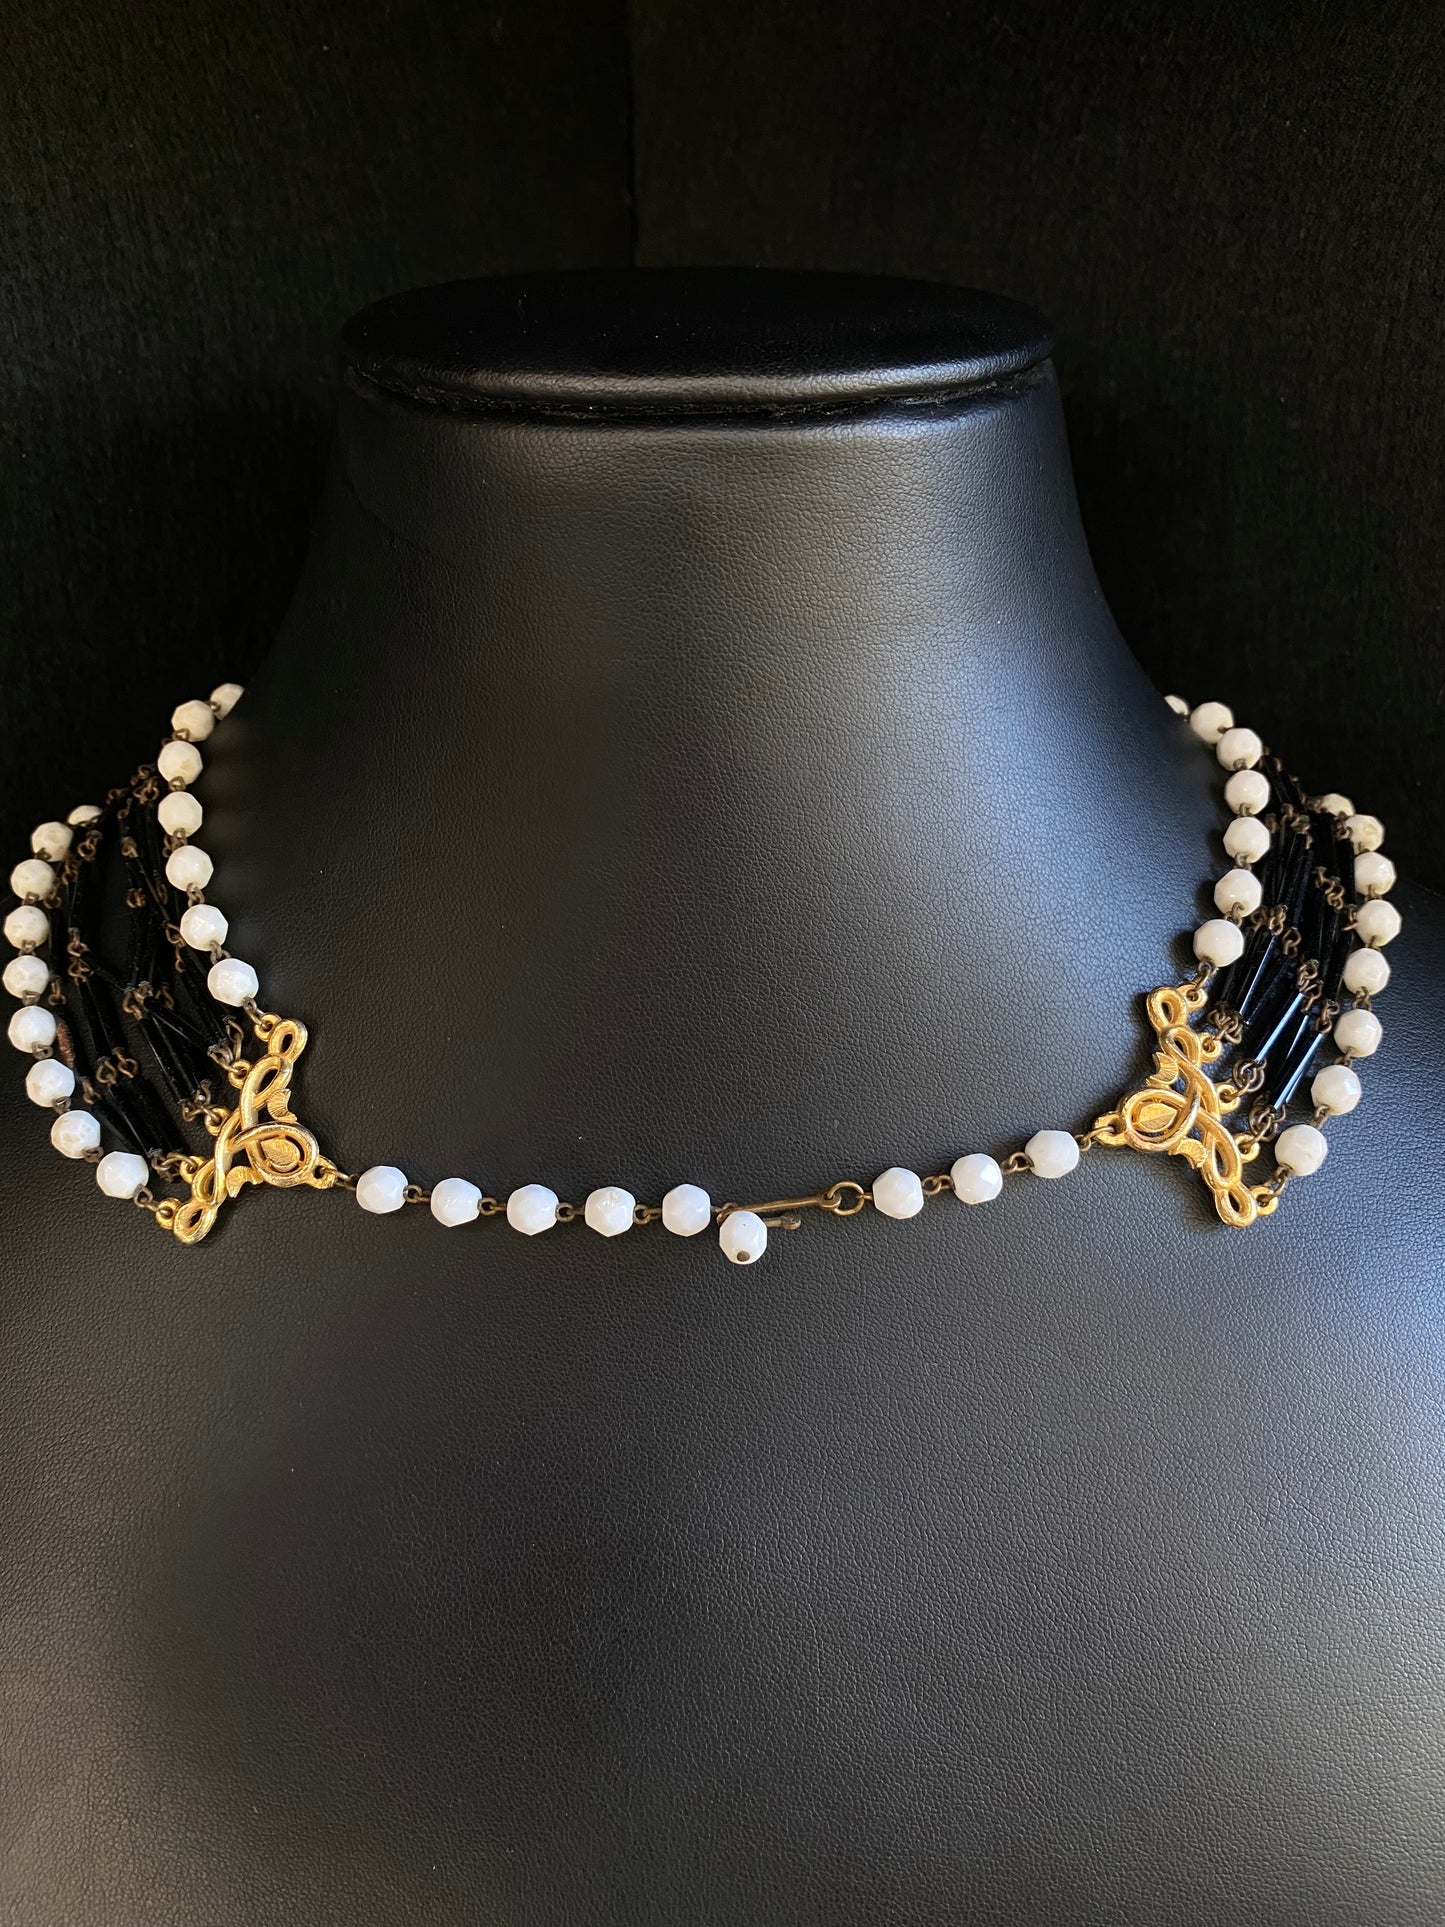 Vintage Bakelite and metal strung necklace